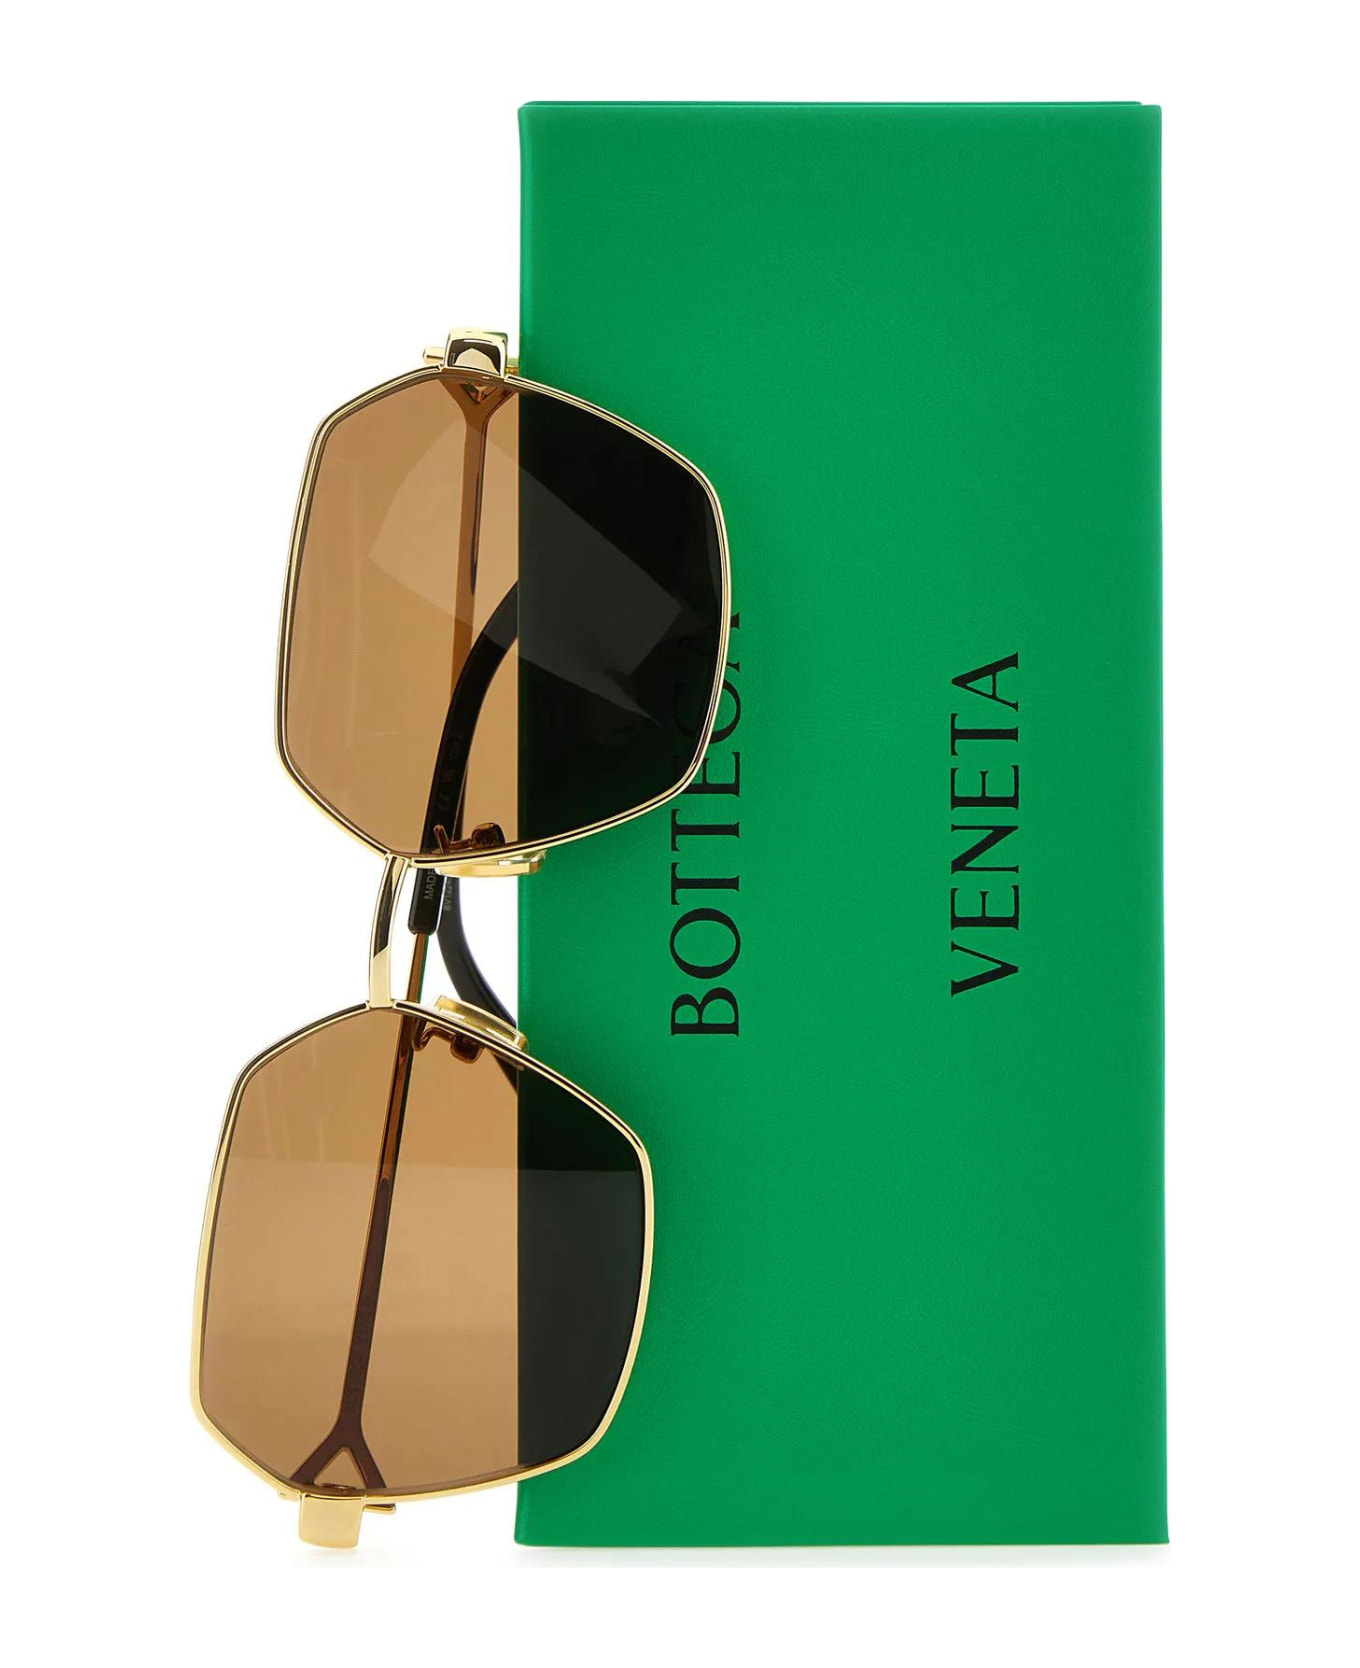 Bottega Veneta Eyewear Gold Metal Sunglasses